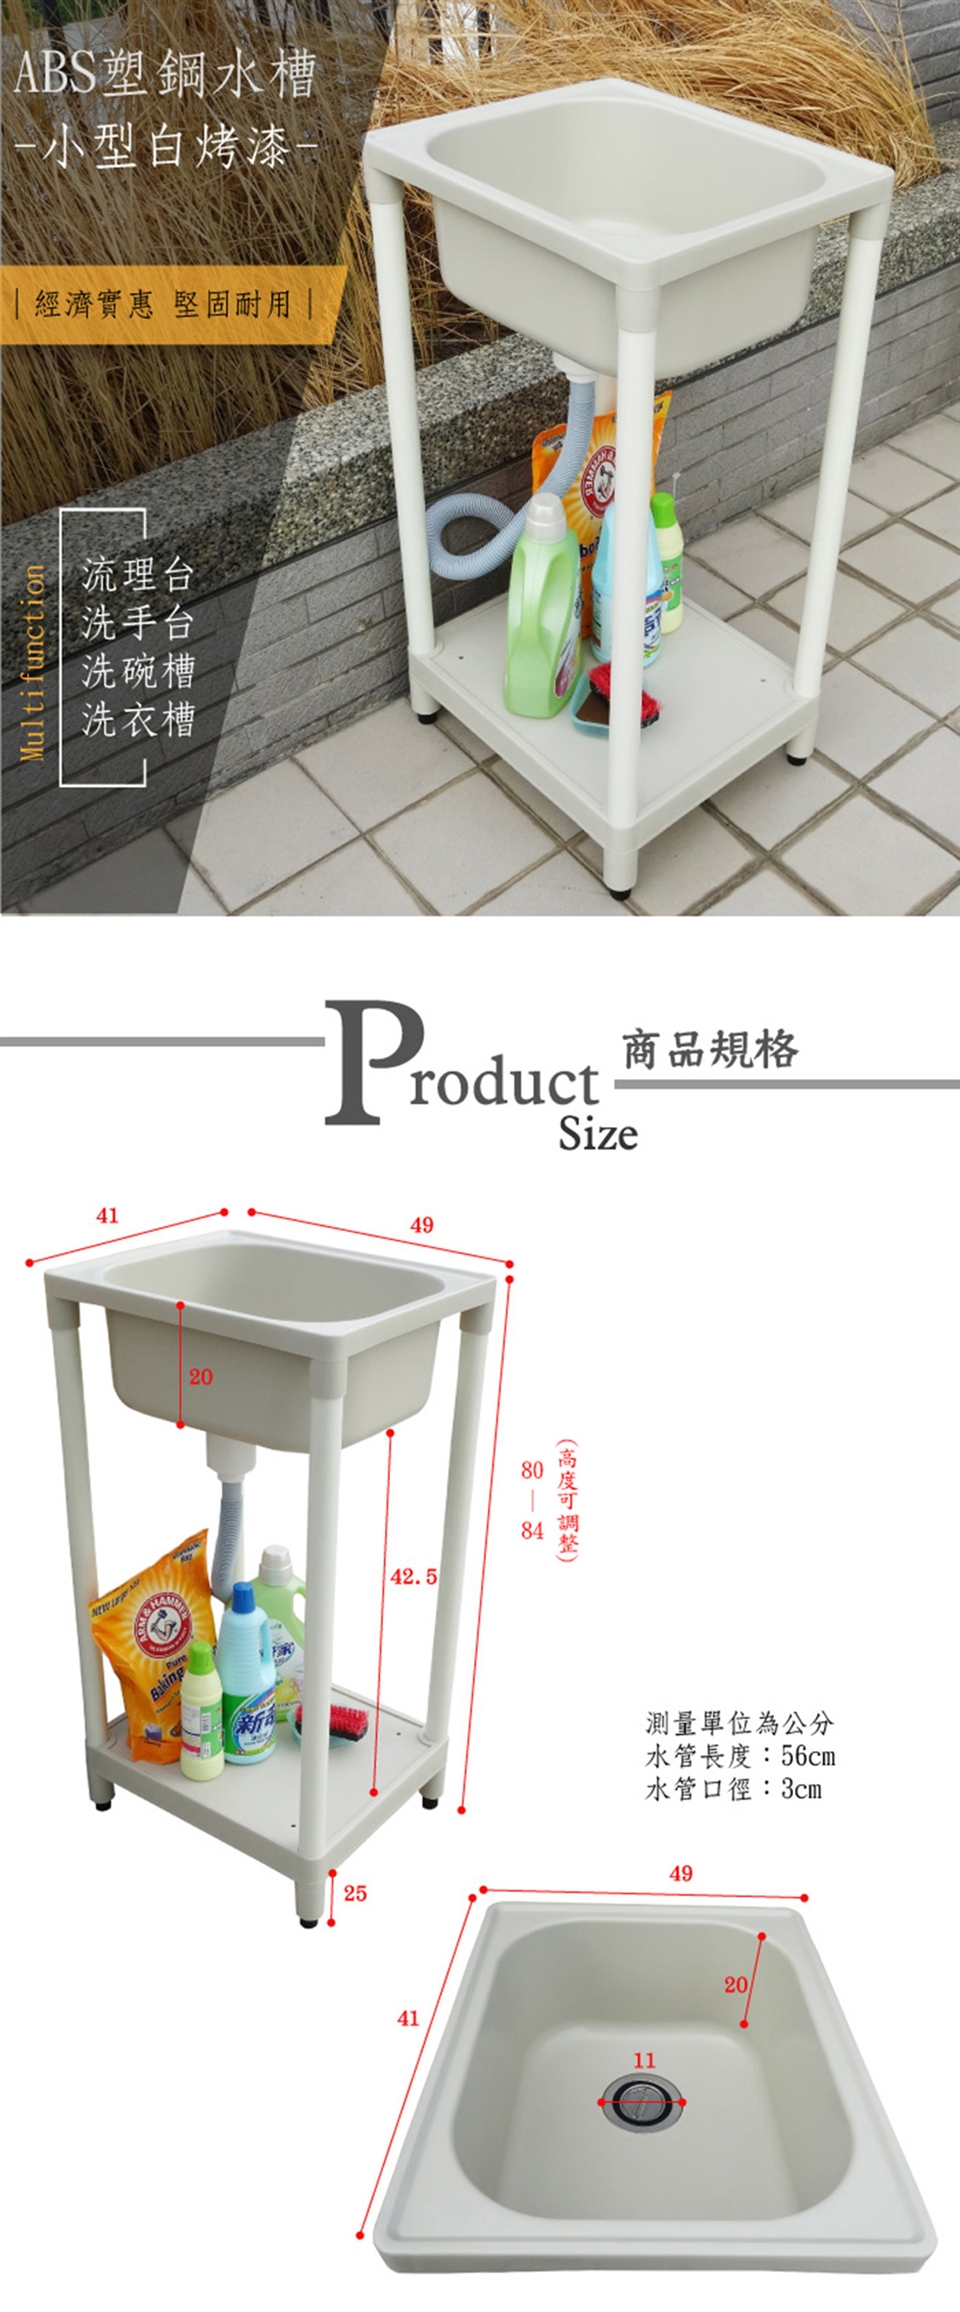 Abis 日式穩固耐用abs塑鋼小型水槽洗衣槽1入 洗衣槽 Etmall東森購物網